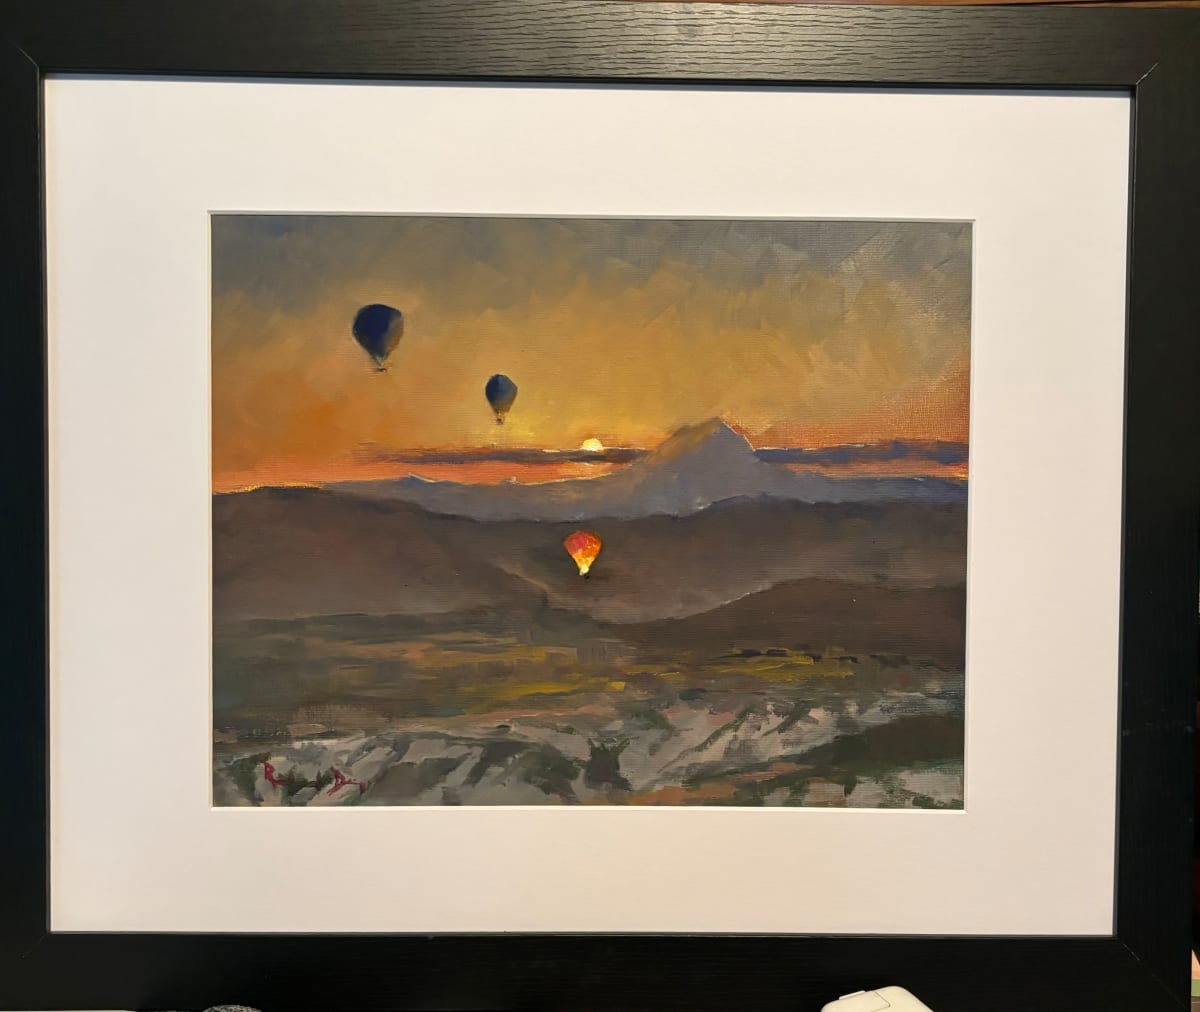 Sunrise Capadoccia Balloons by Richard W Diego  Image: Oil on canvass board